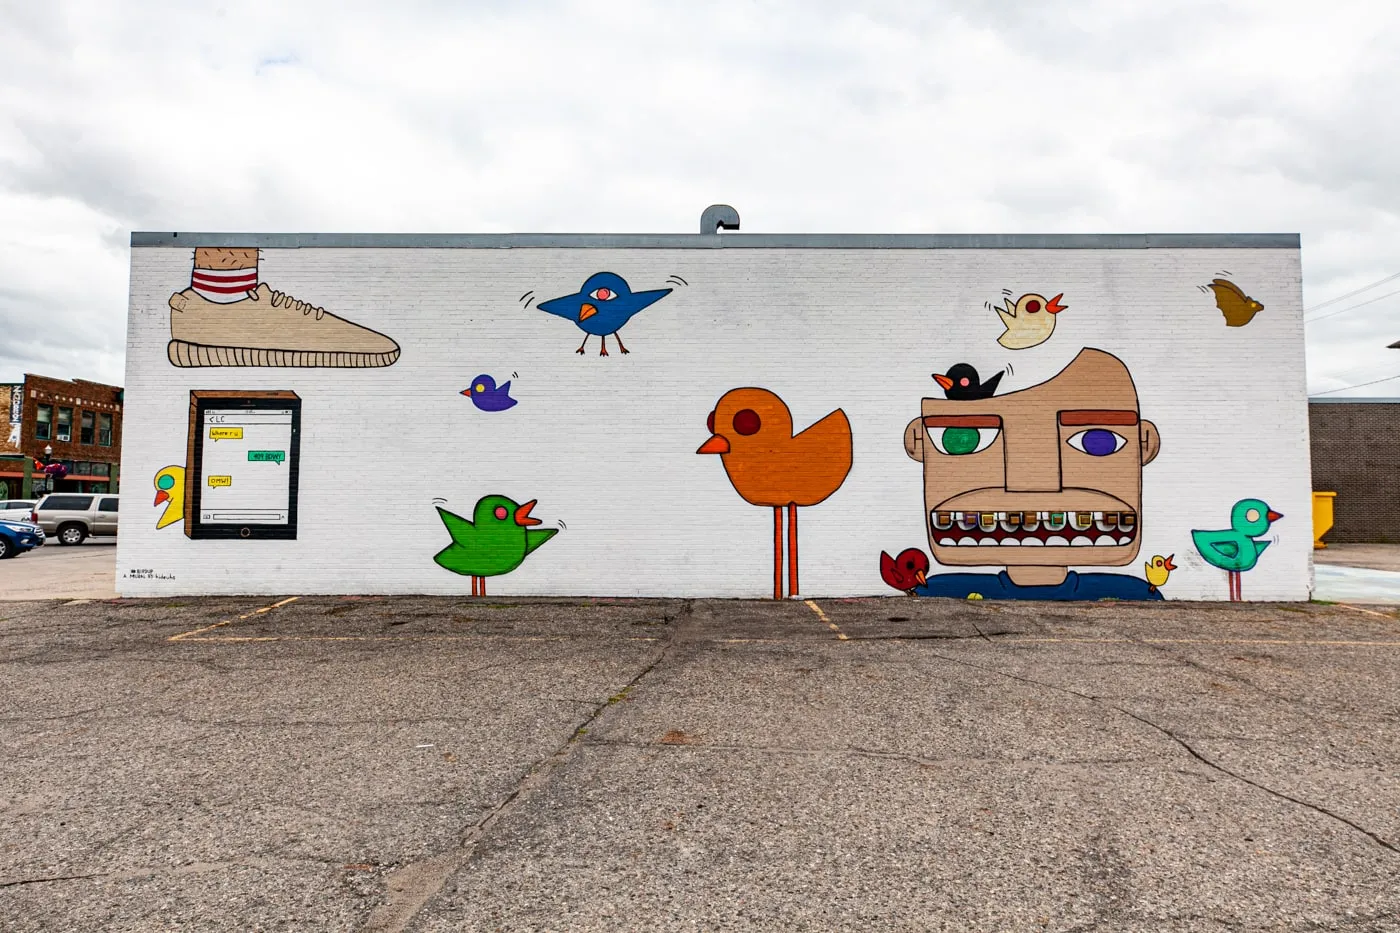 Bird Up Mural in Downtown Fargo, North Dakota by artist Hideuhs | Street Art in Fargo, North Dakota